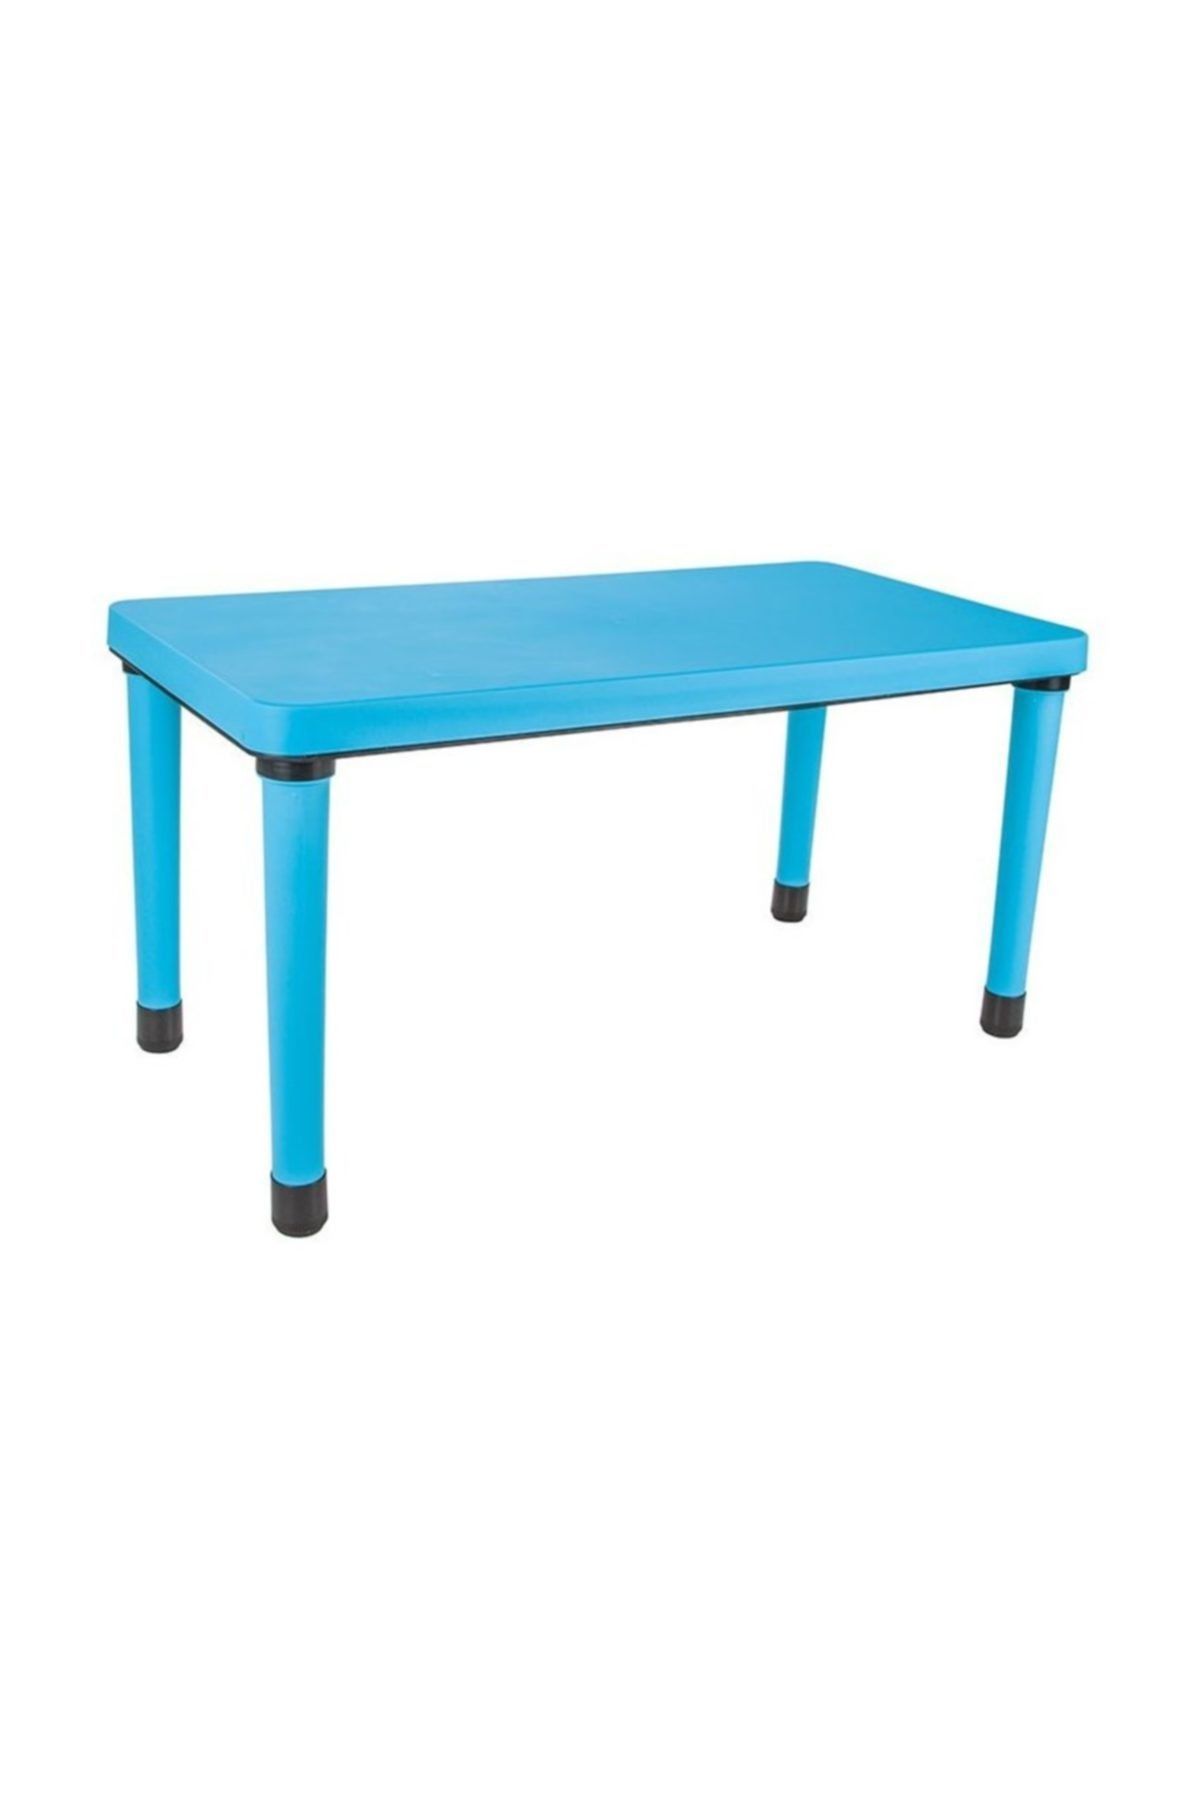 PİLSAN Happy Masa Eğitici Anaokulu Masası 60x120 Cm Mavi Masa